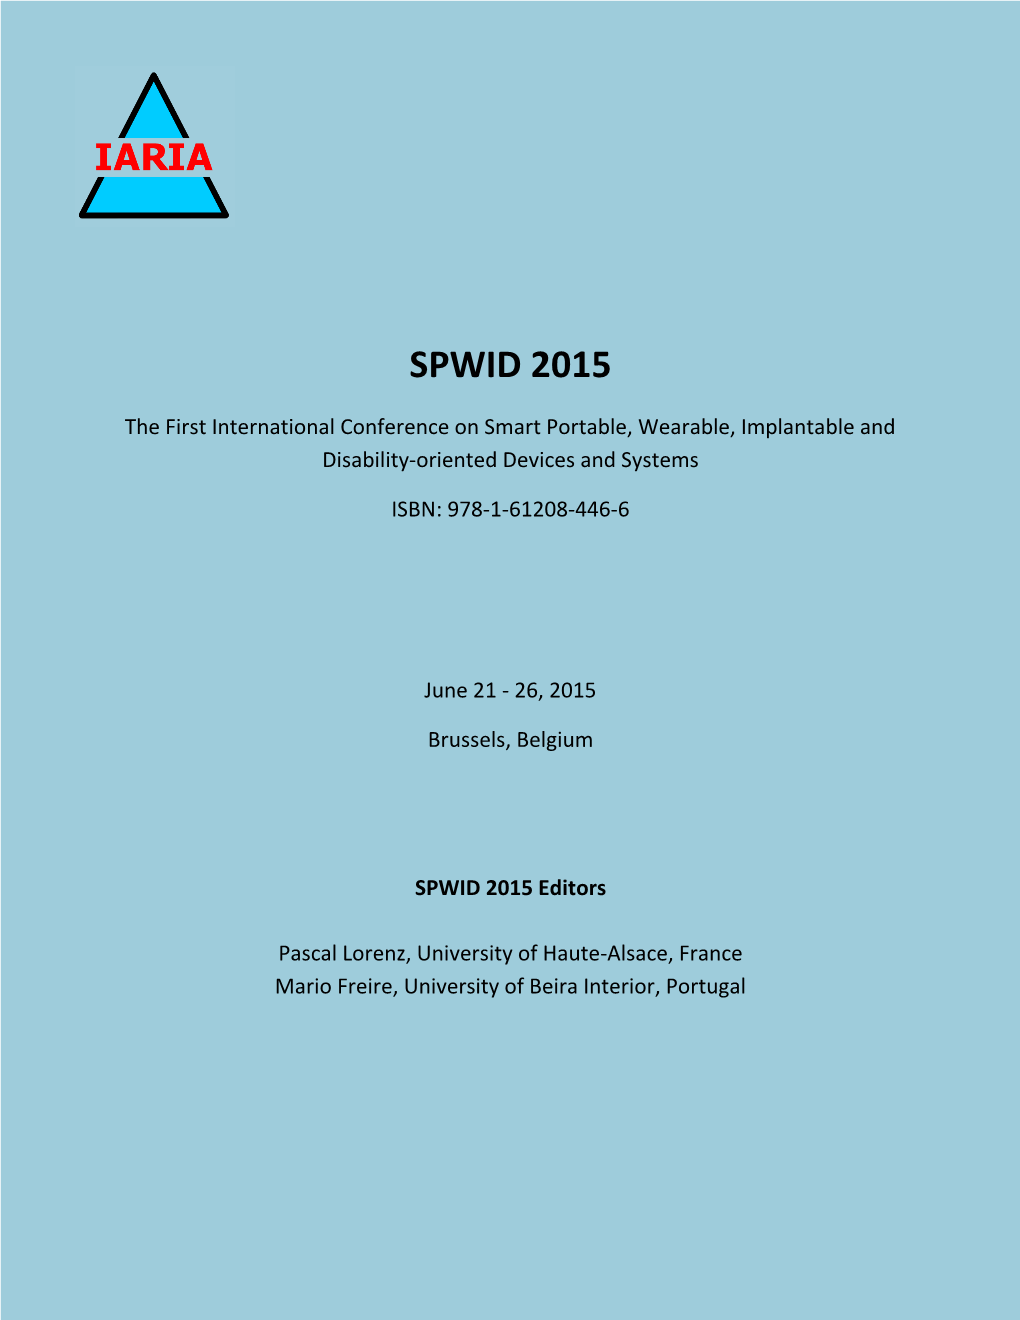 SPWID 2015 Proceedings